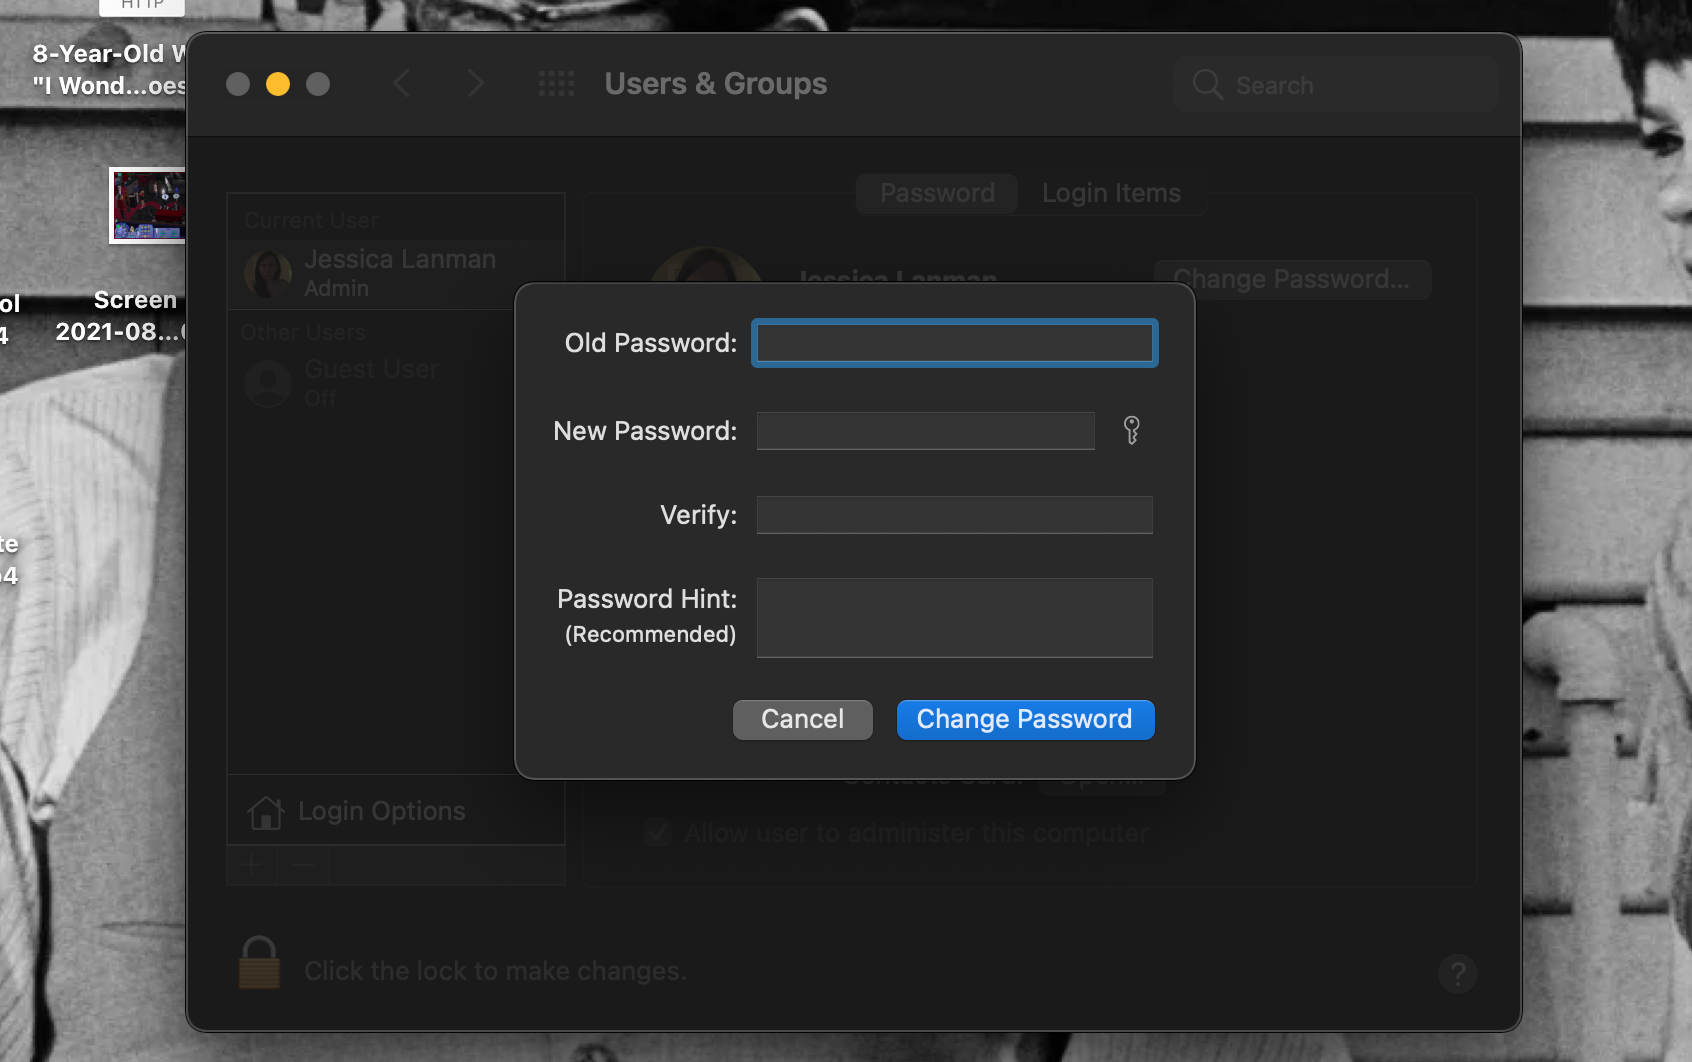 macbook keychain password